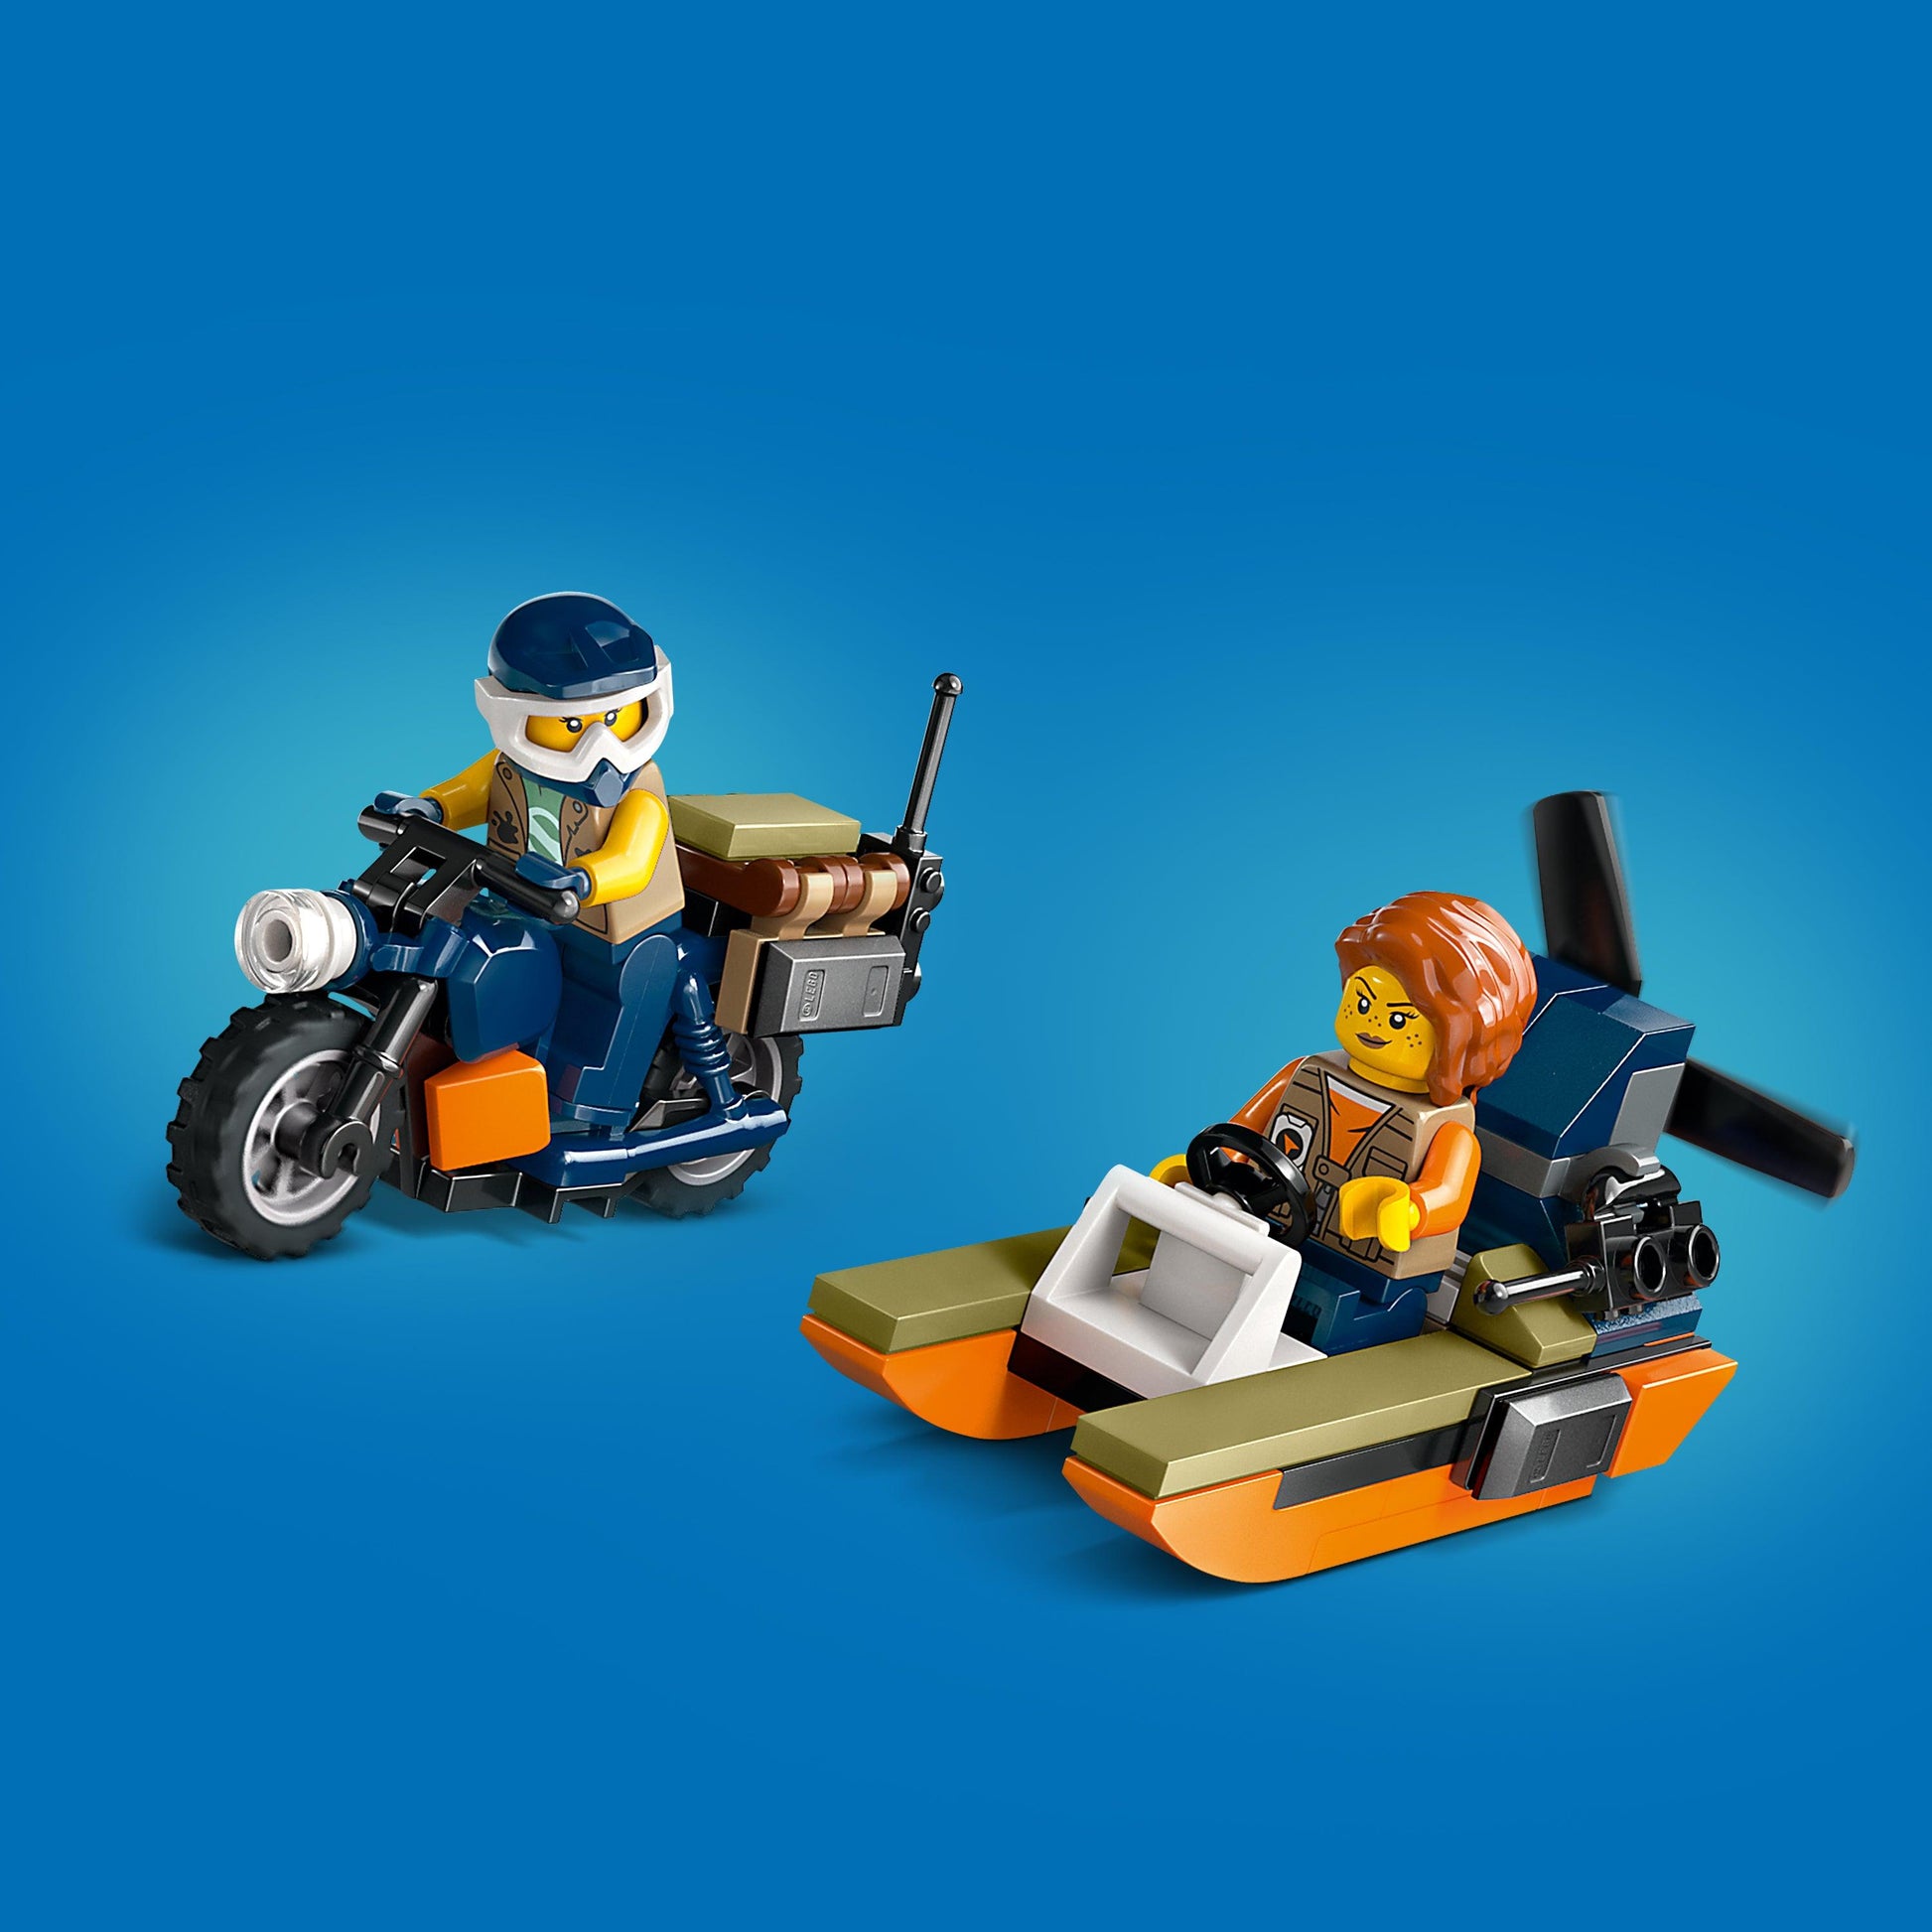 LEGO Helicopter & Explorer Basis 60437 City (Pre-Order: verwacht juni) LEGO CITY @ 2TTOYS LEGO €. 84.99